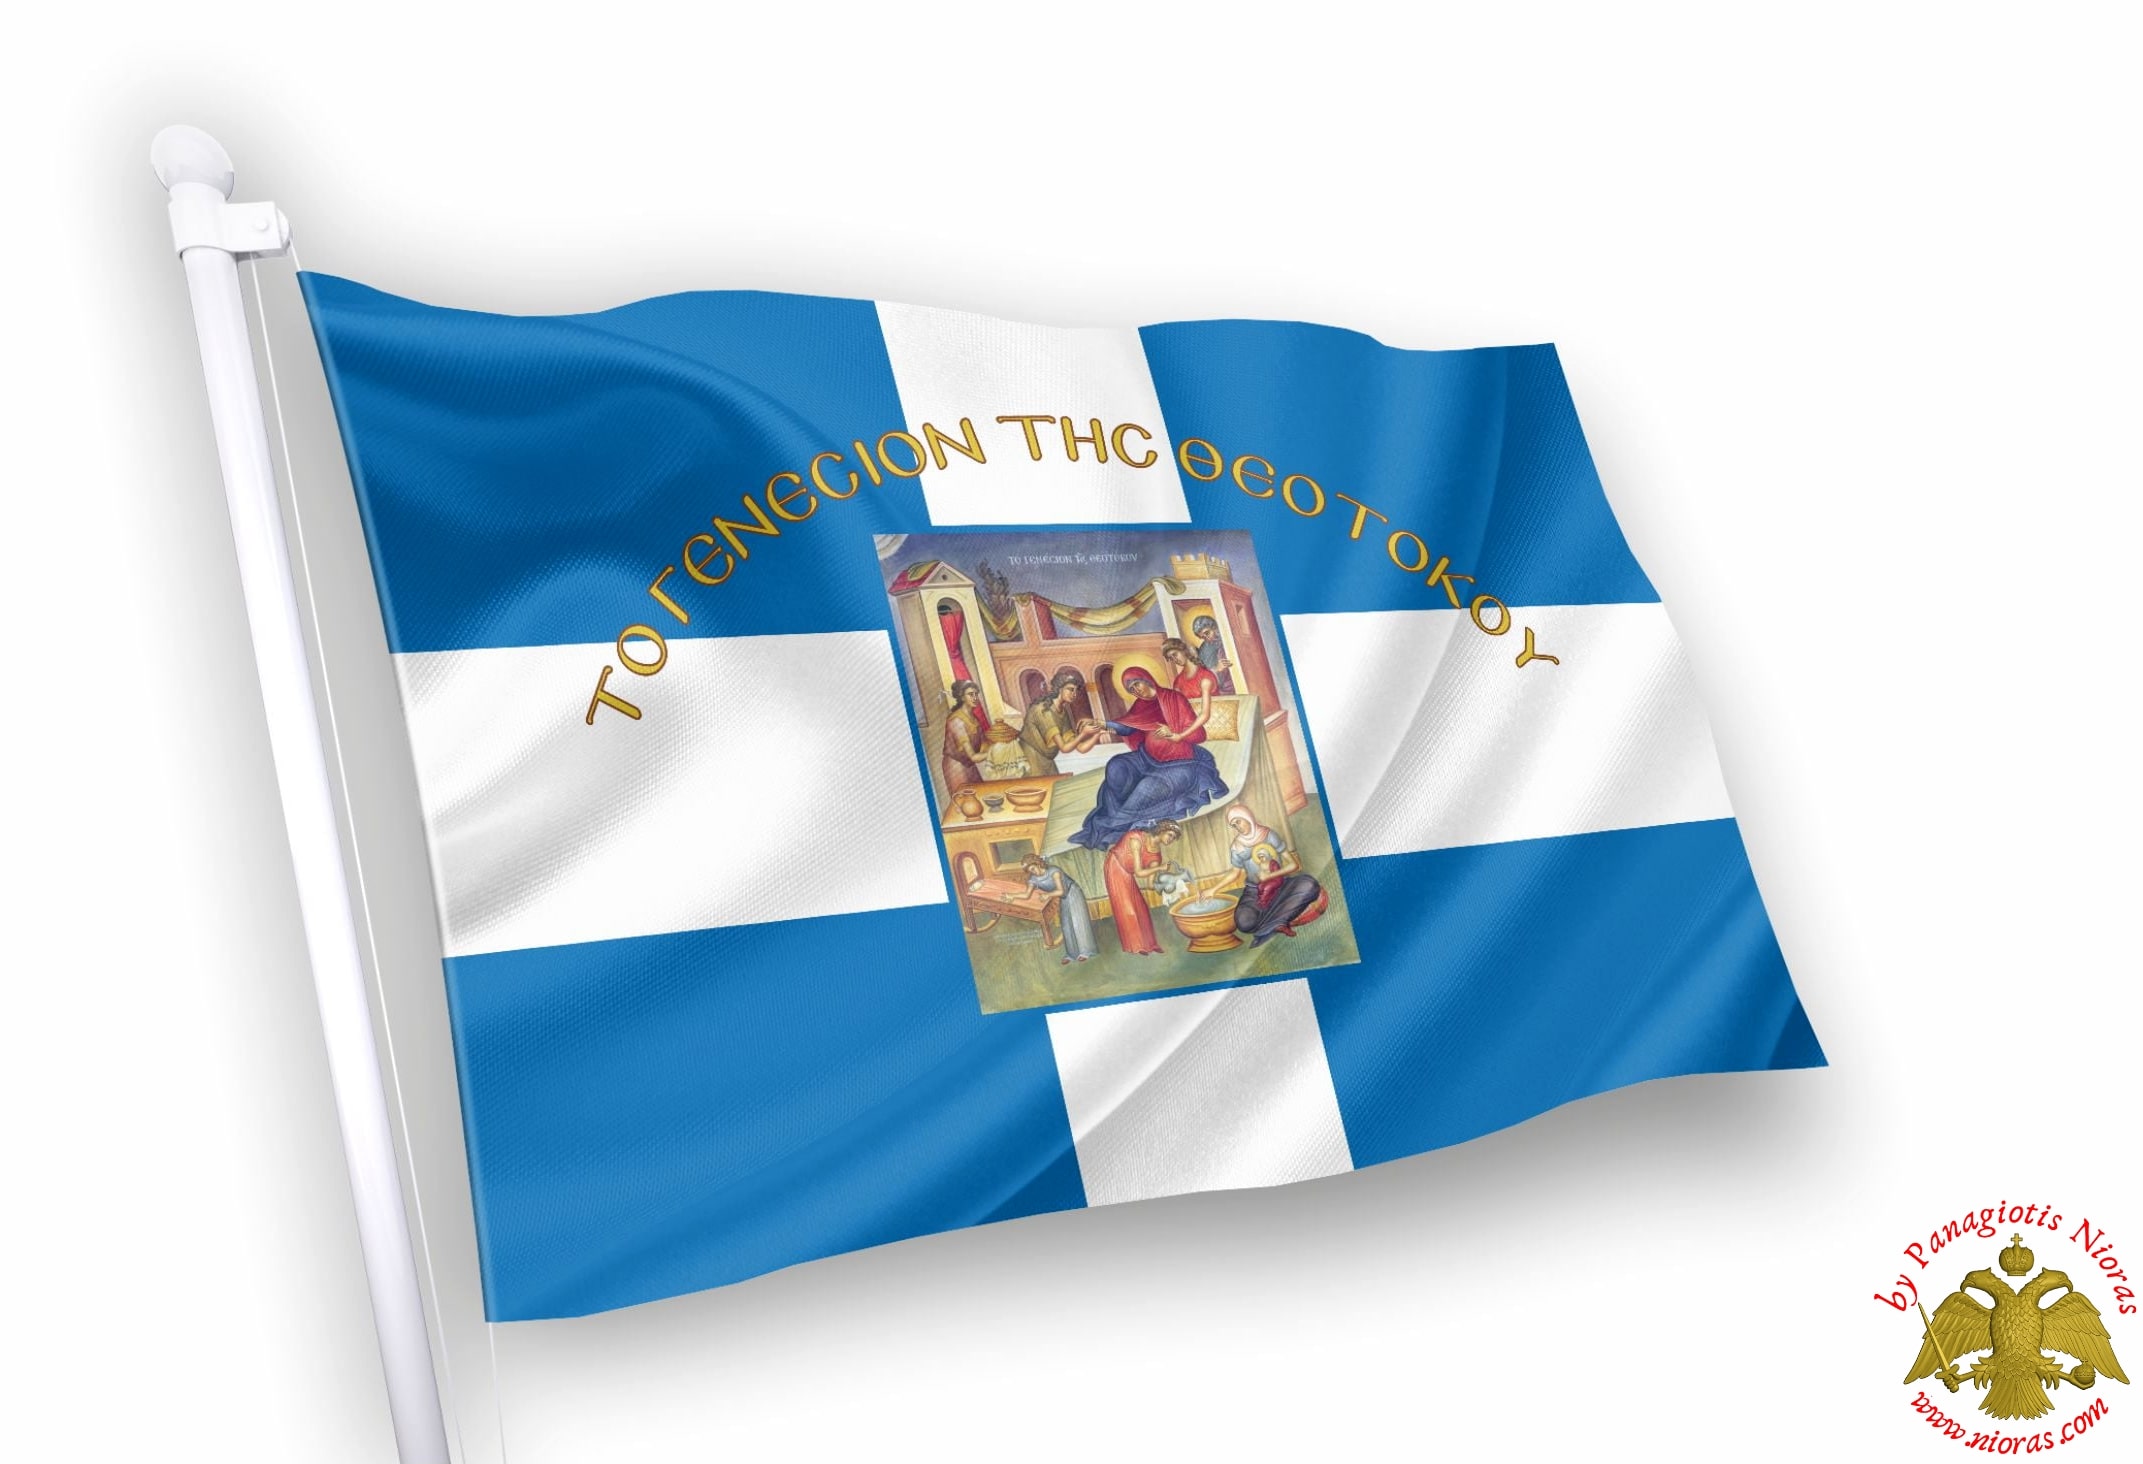 Genesion Theotokos Orthodox Greek Flag with Holy Icon